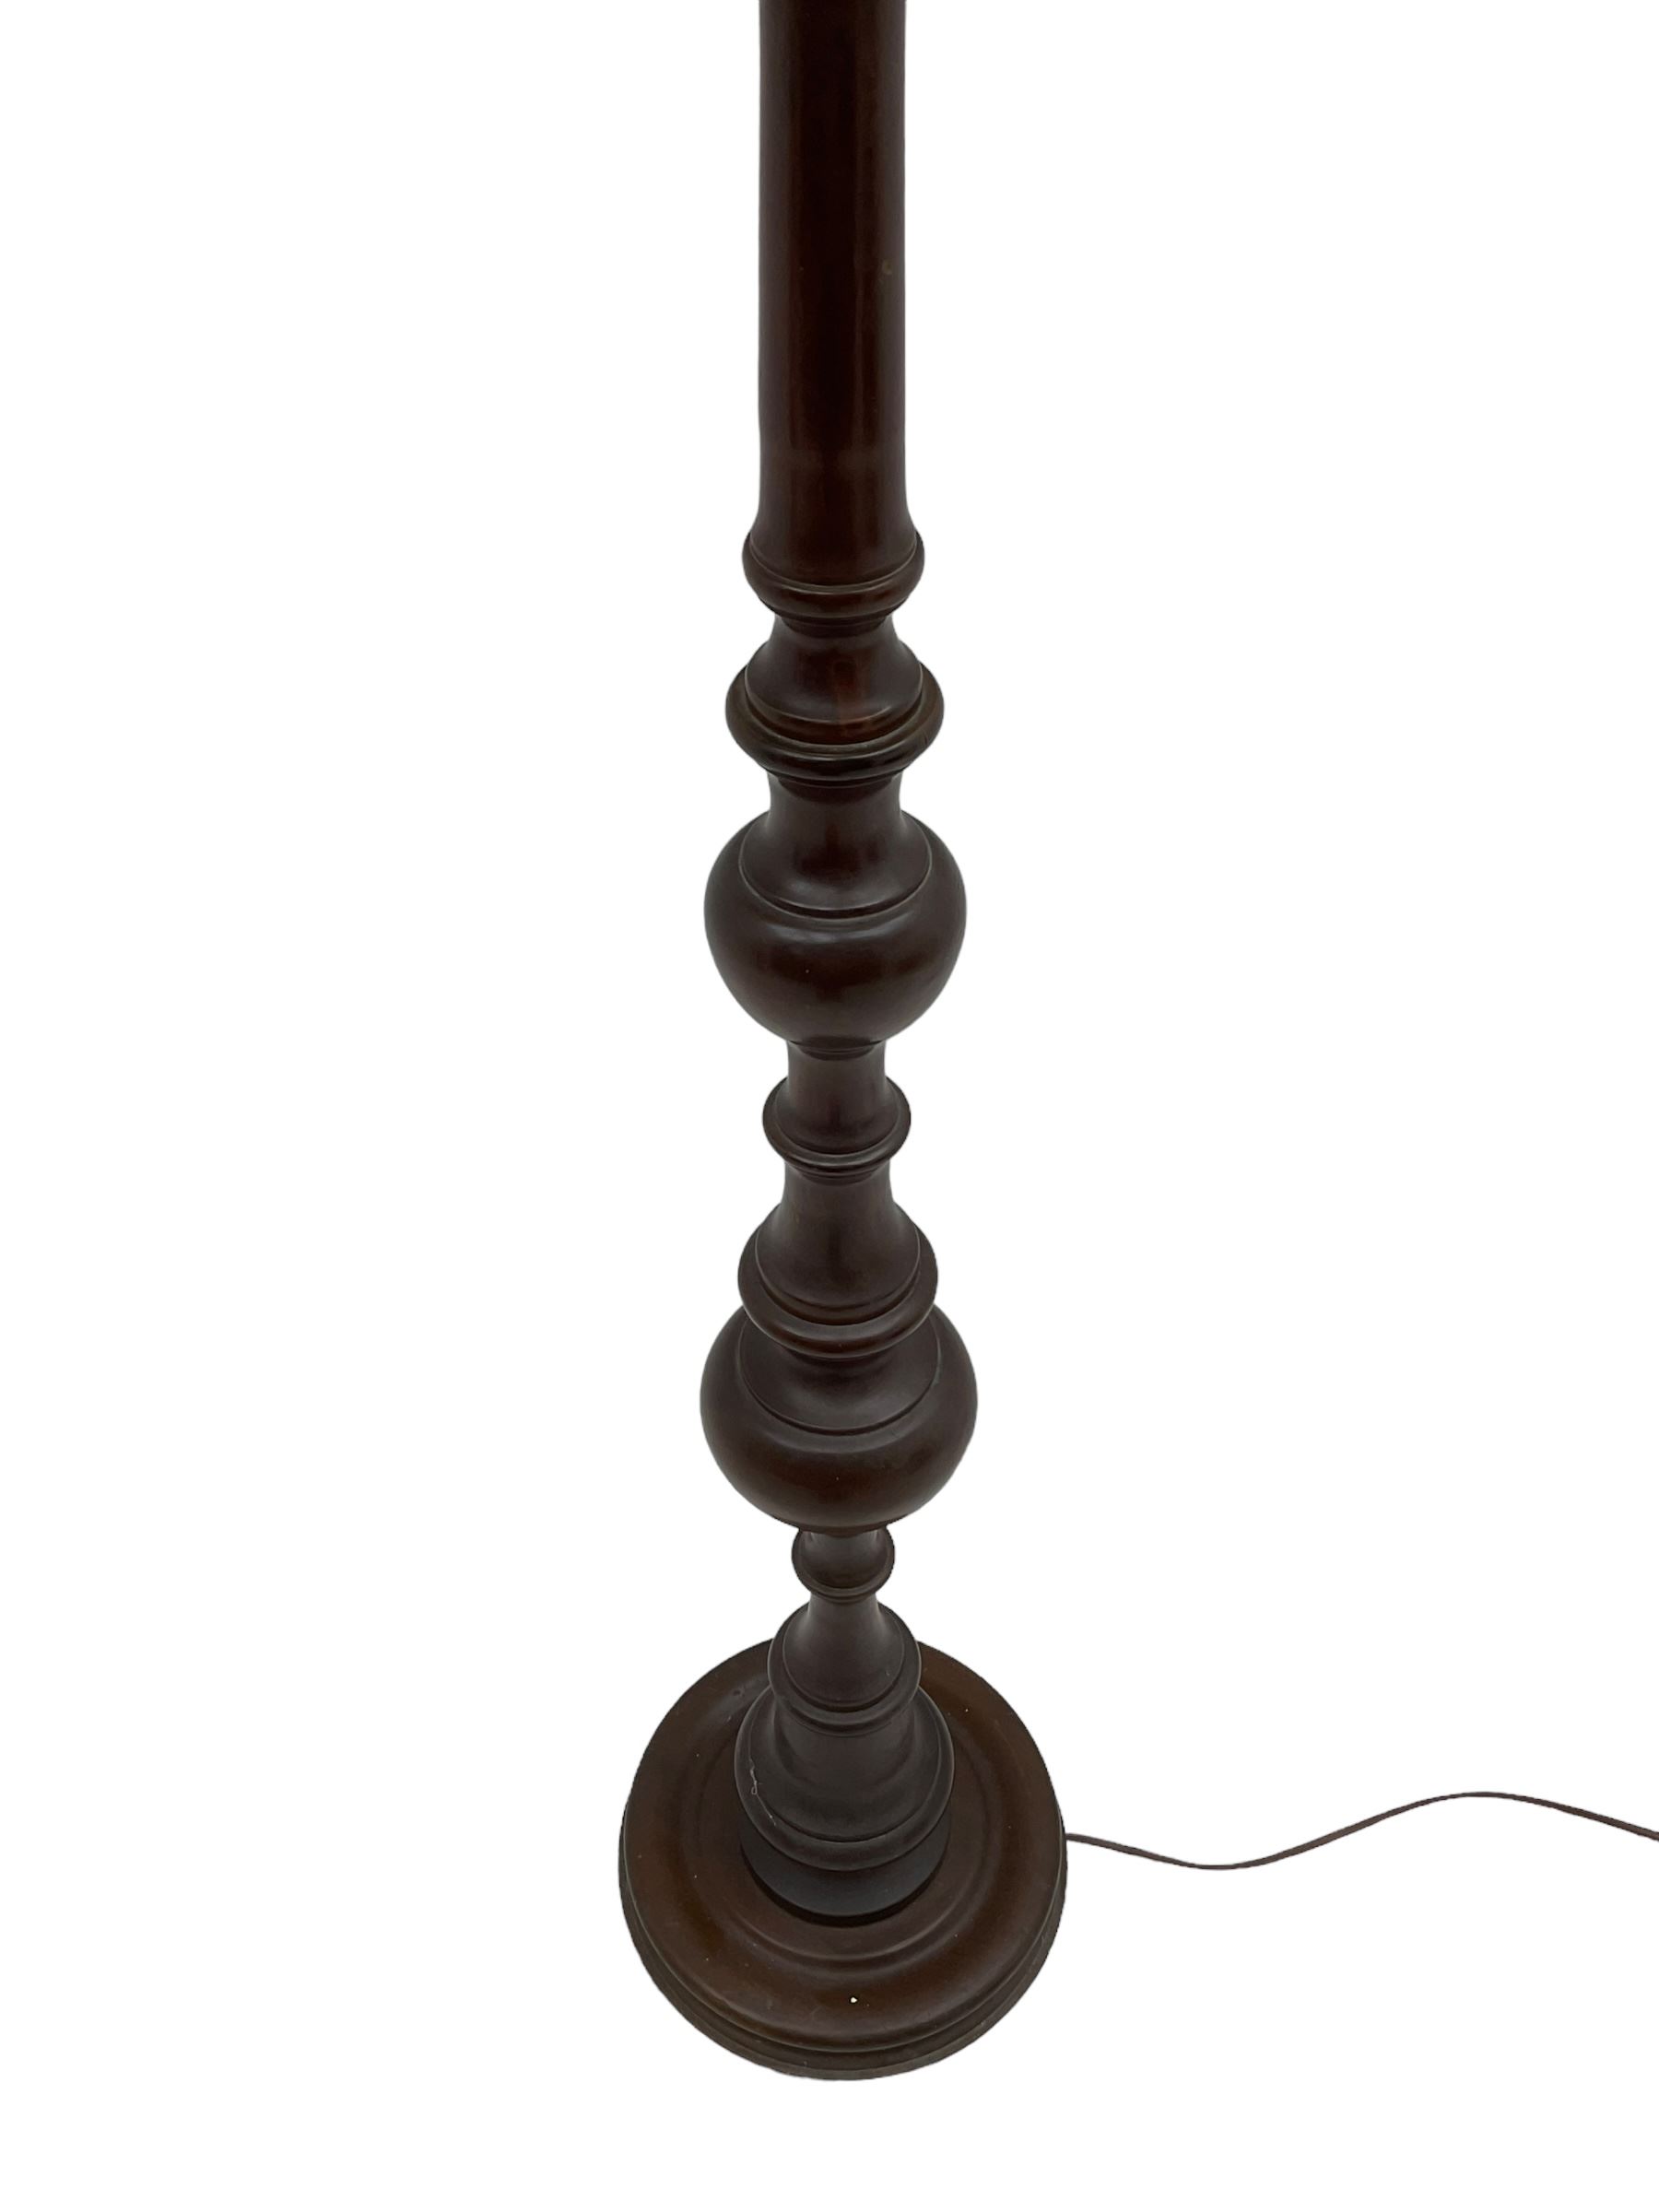 20th century walnut standard lamp - Image 2 of 4